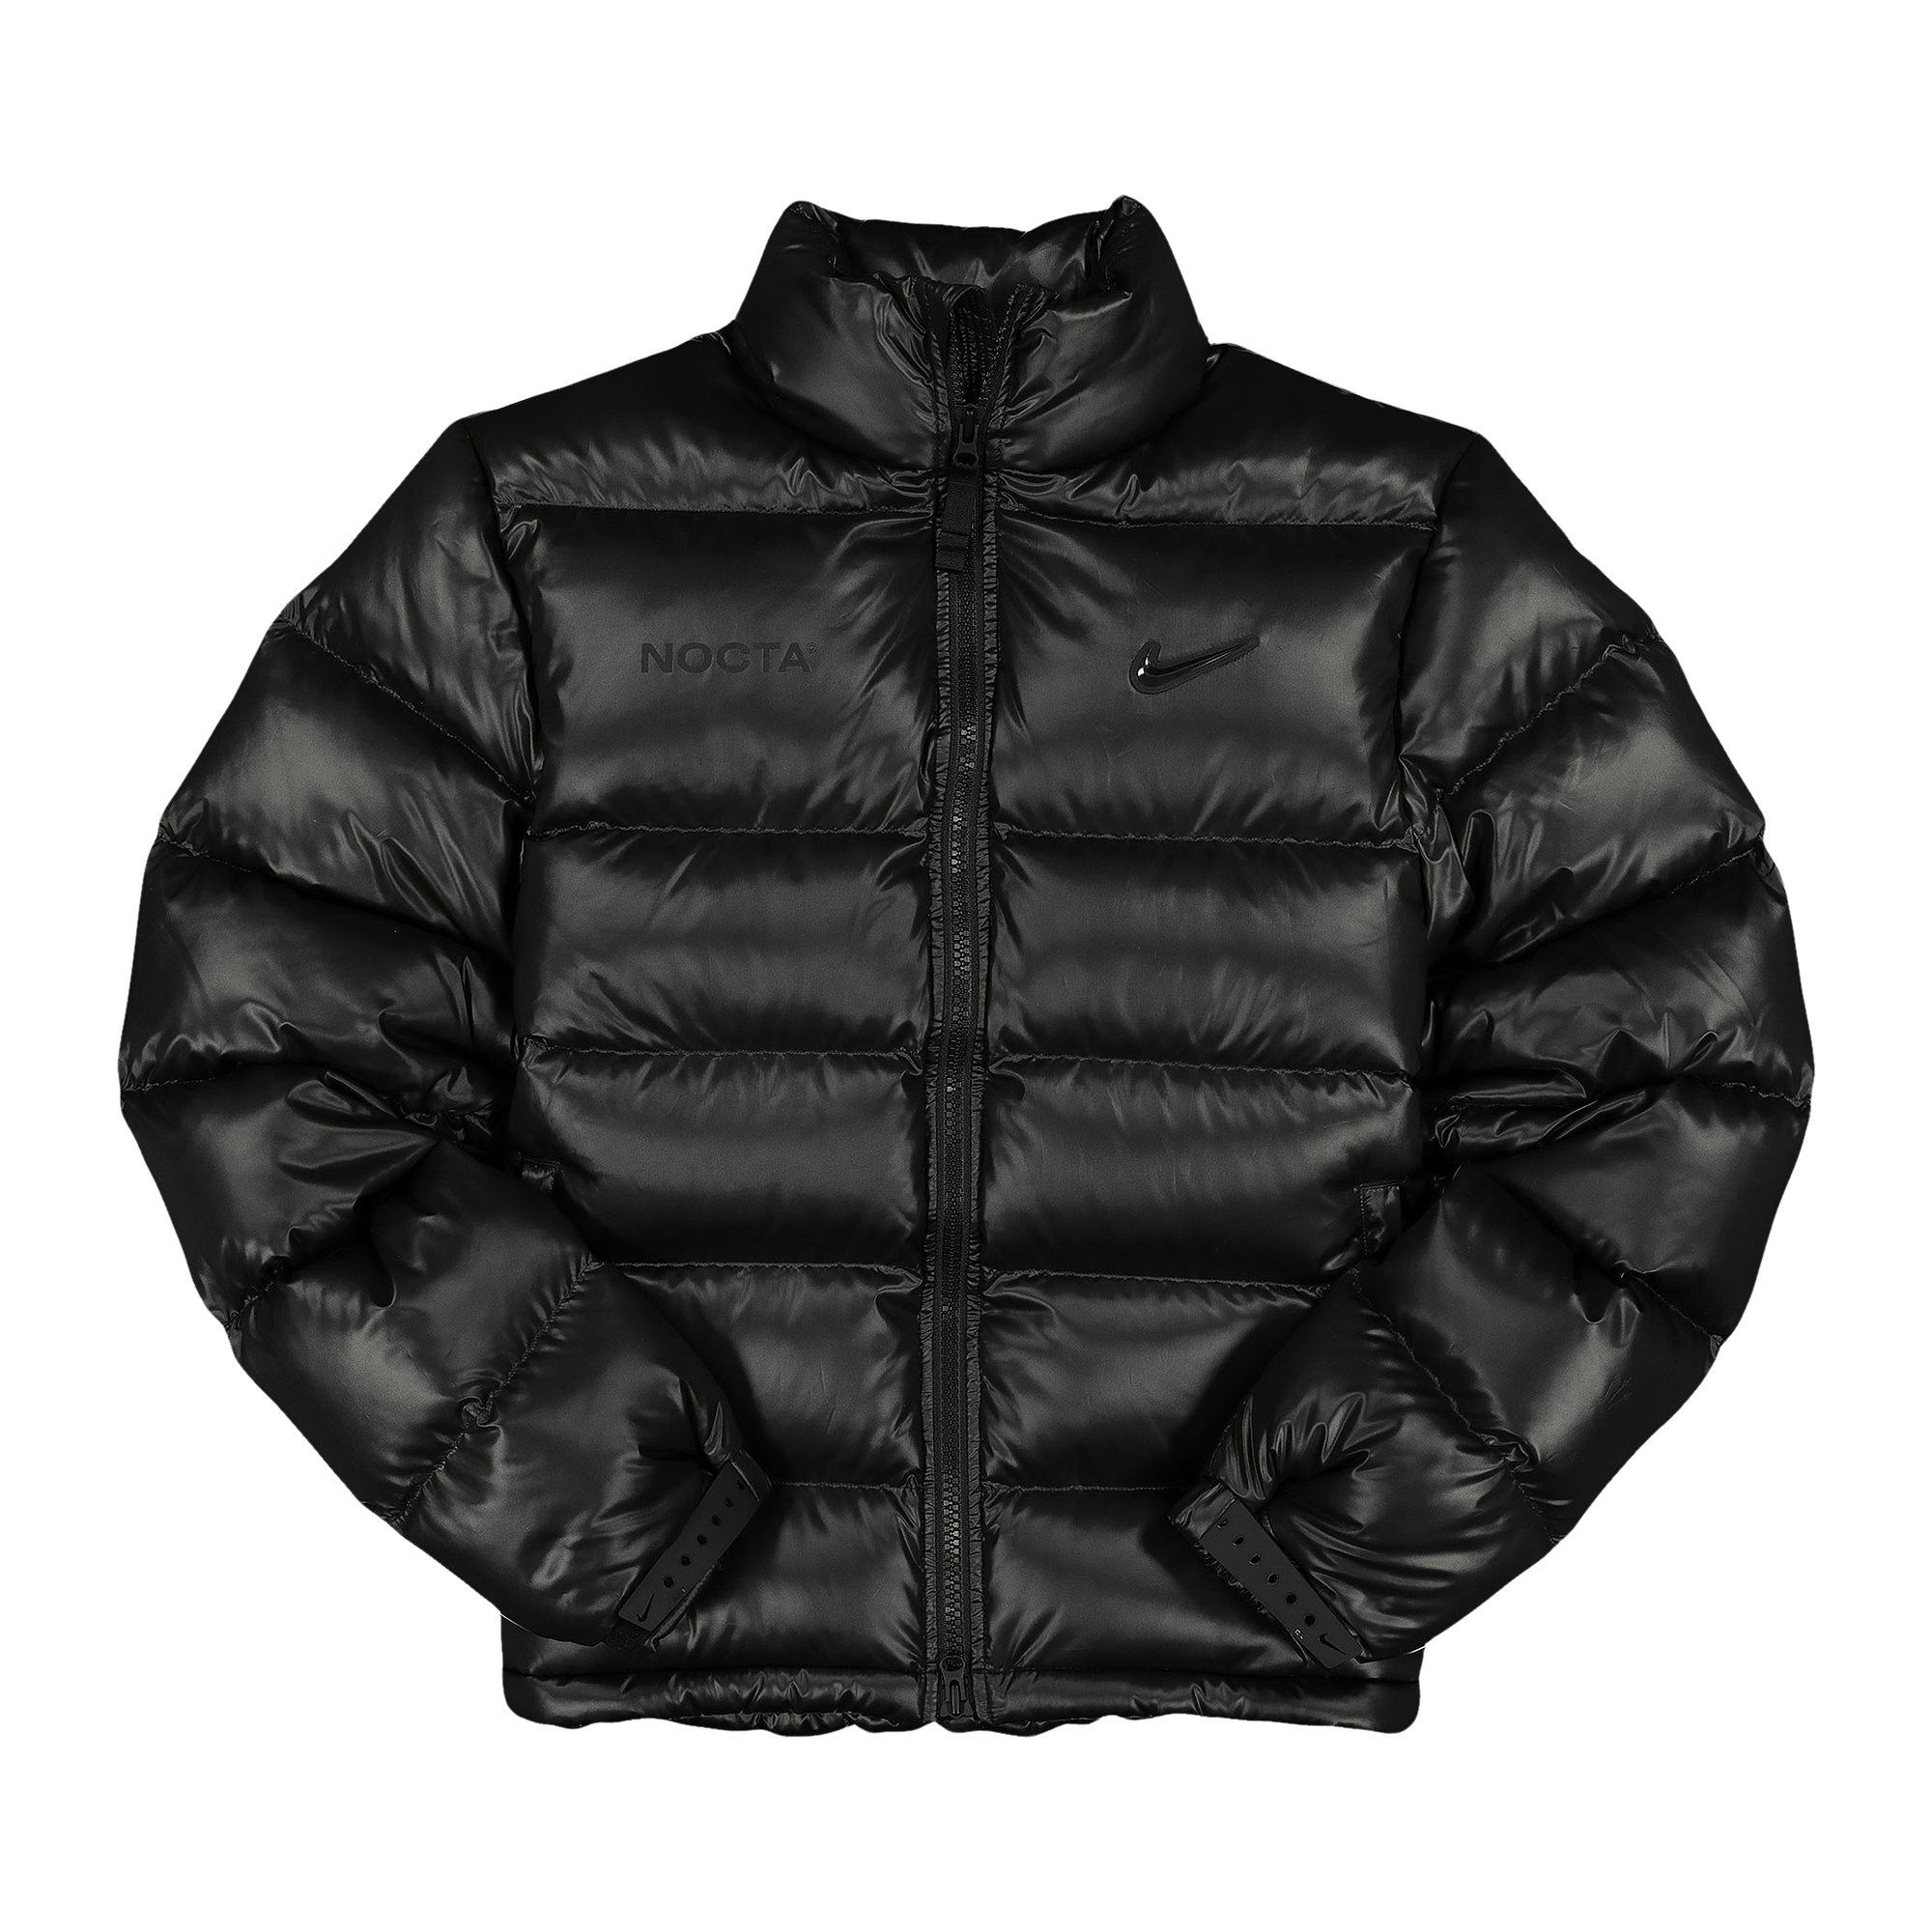 Nike x Drake NOCTA NRG Puffer Jacket 'Black' | GOAT